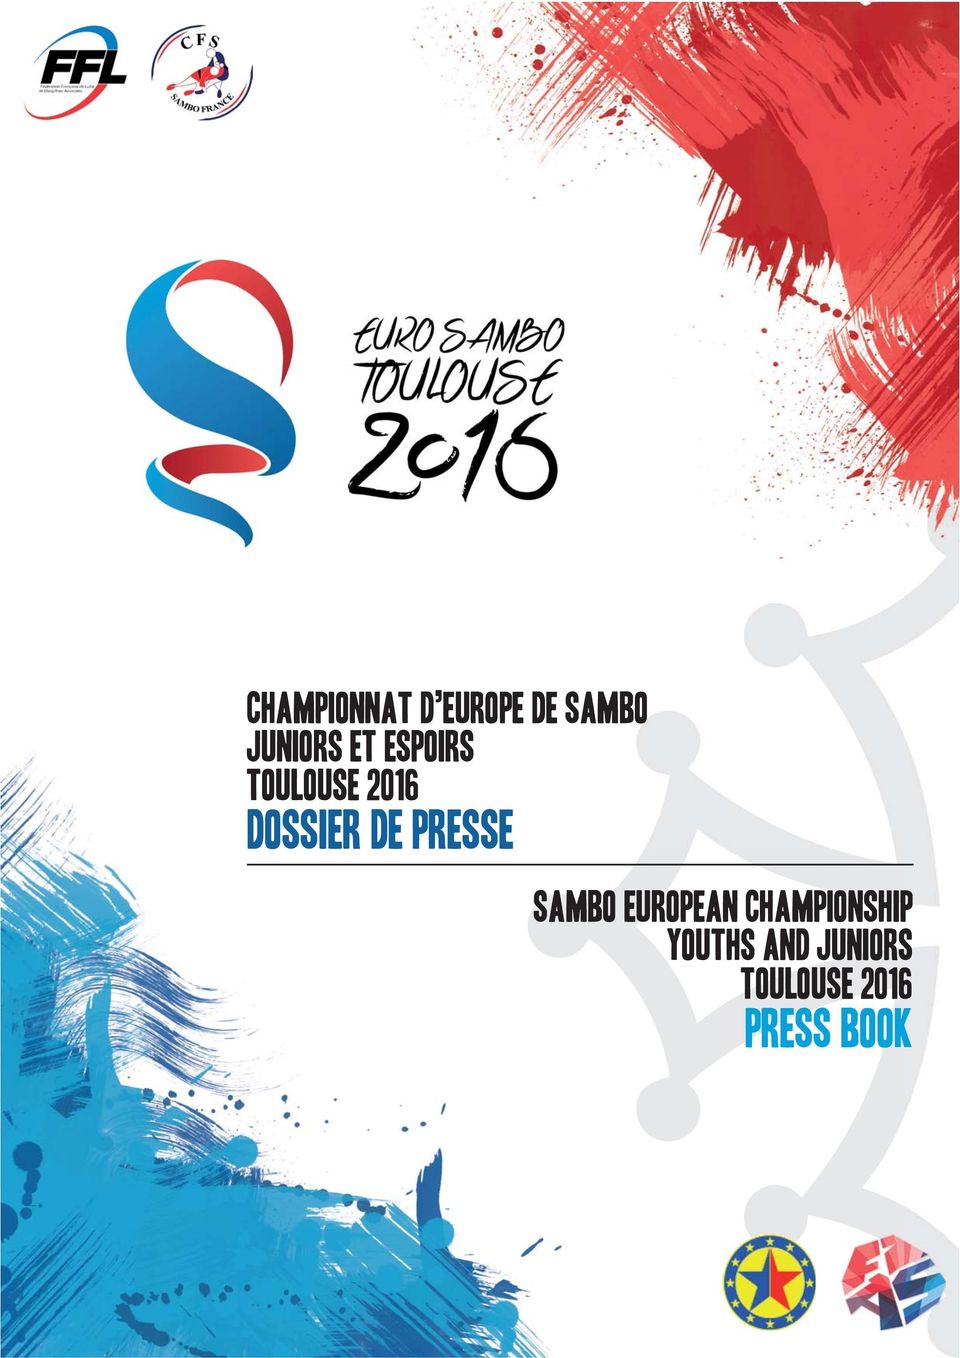 presse sambo european championship